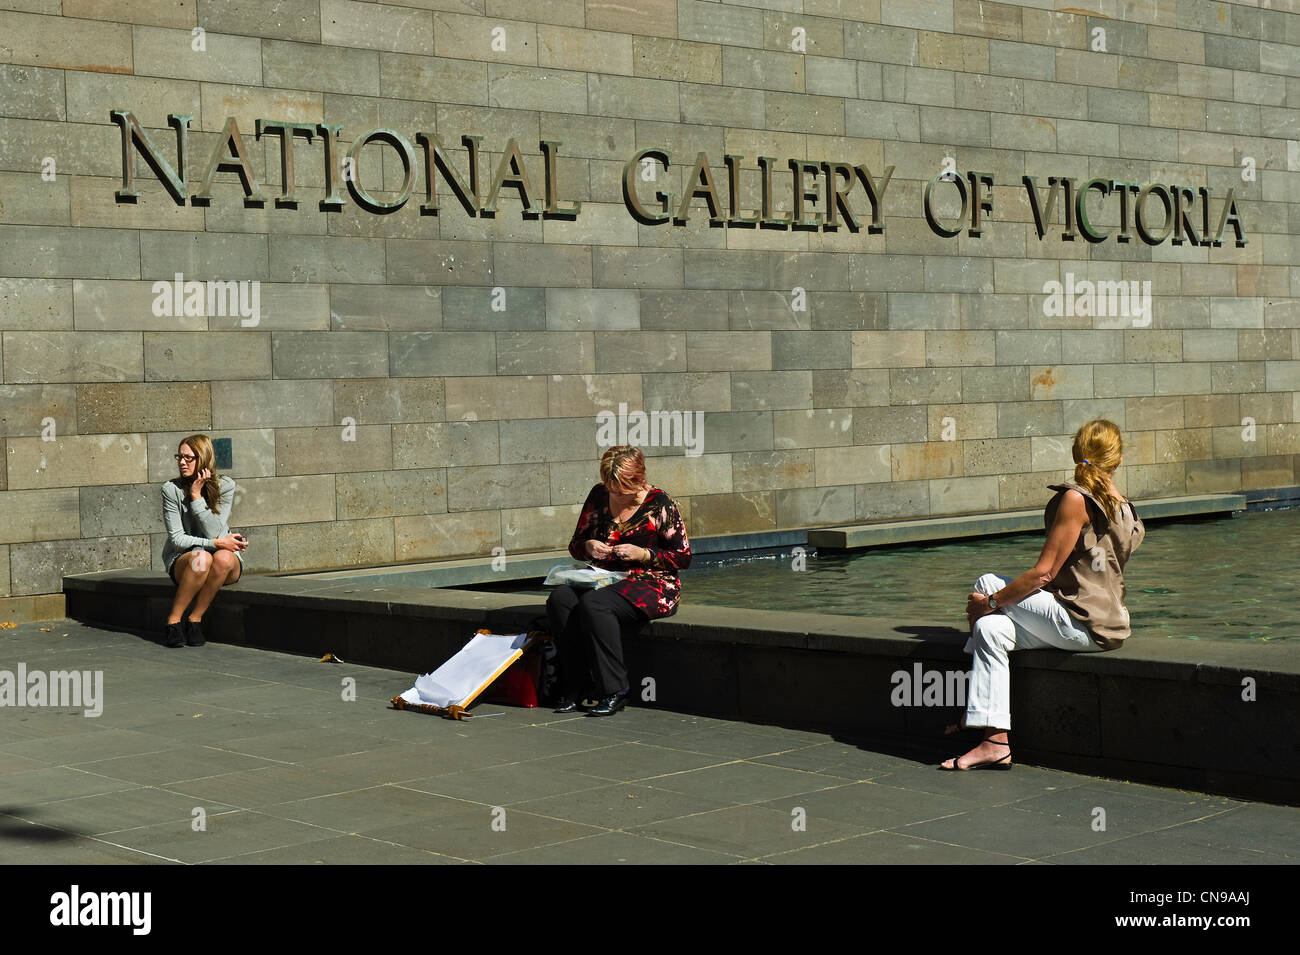 Australia, Victoria, Melbourne, National Gallery of Victoria entrance Stock Photo